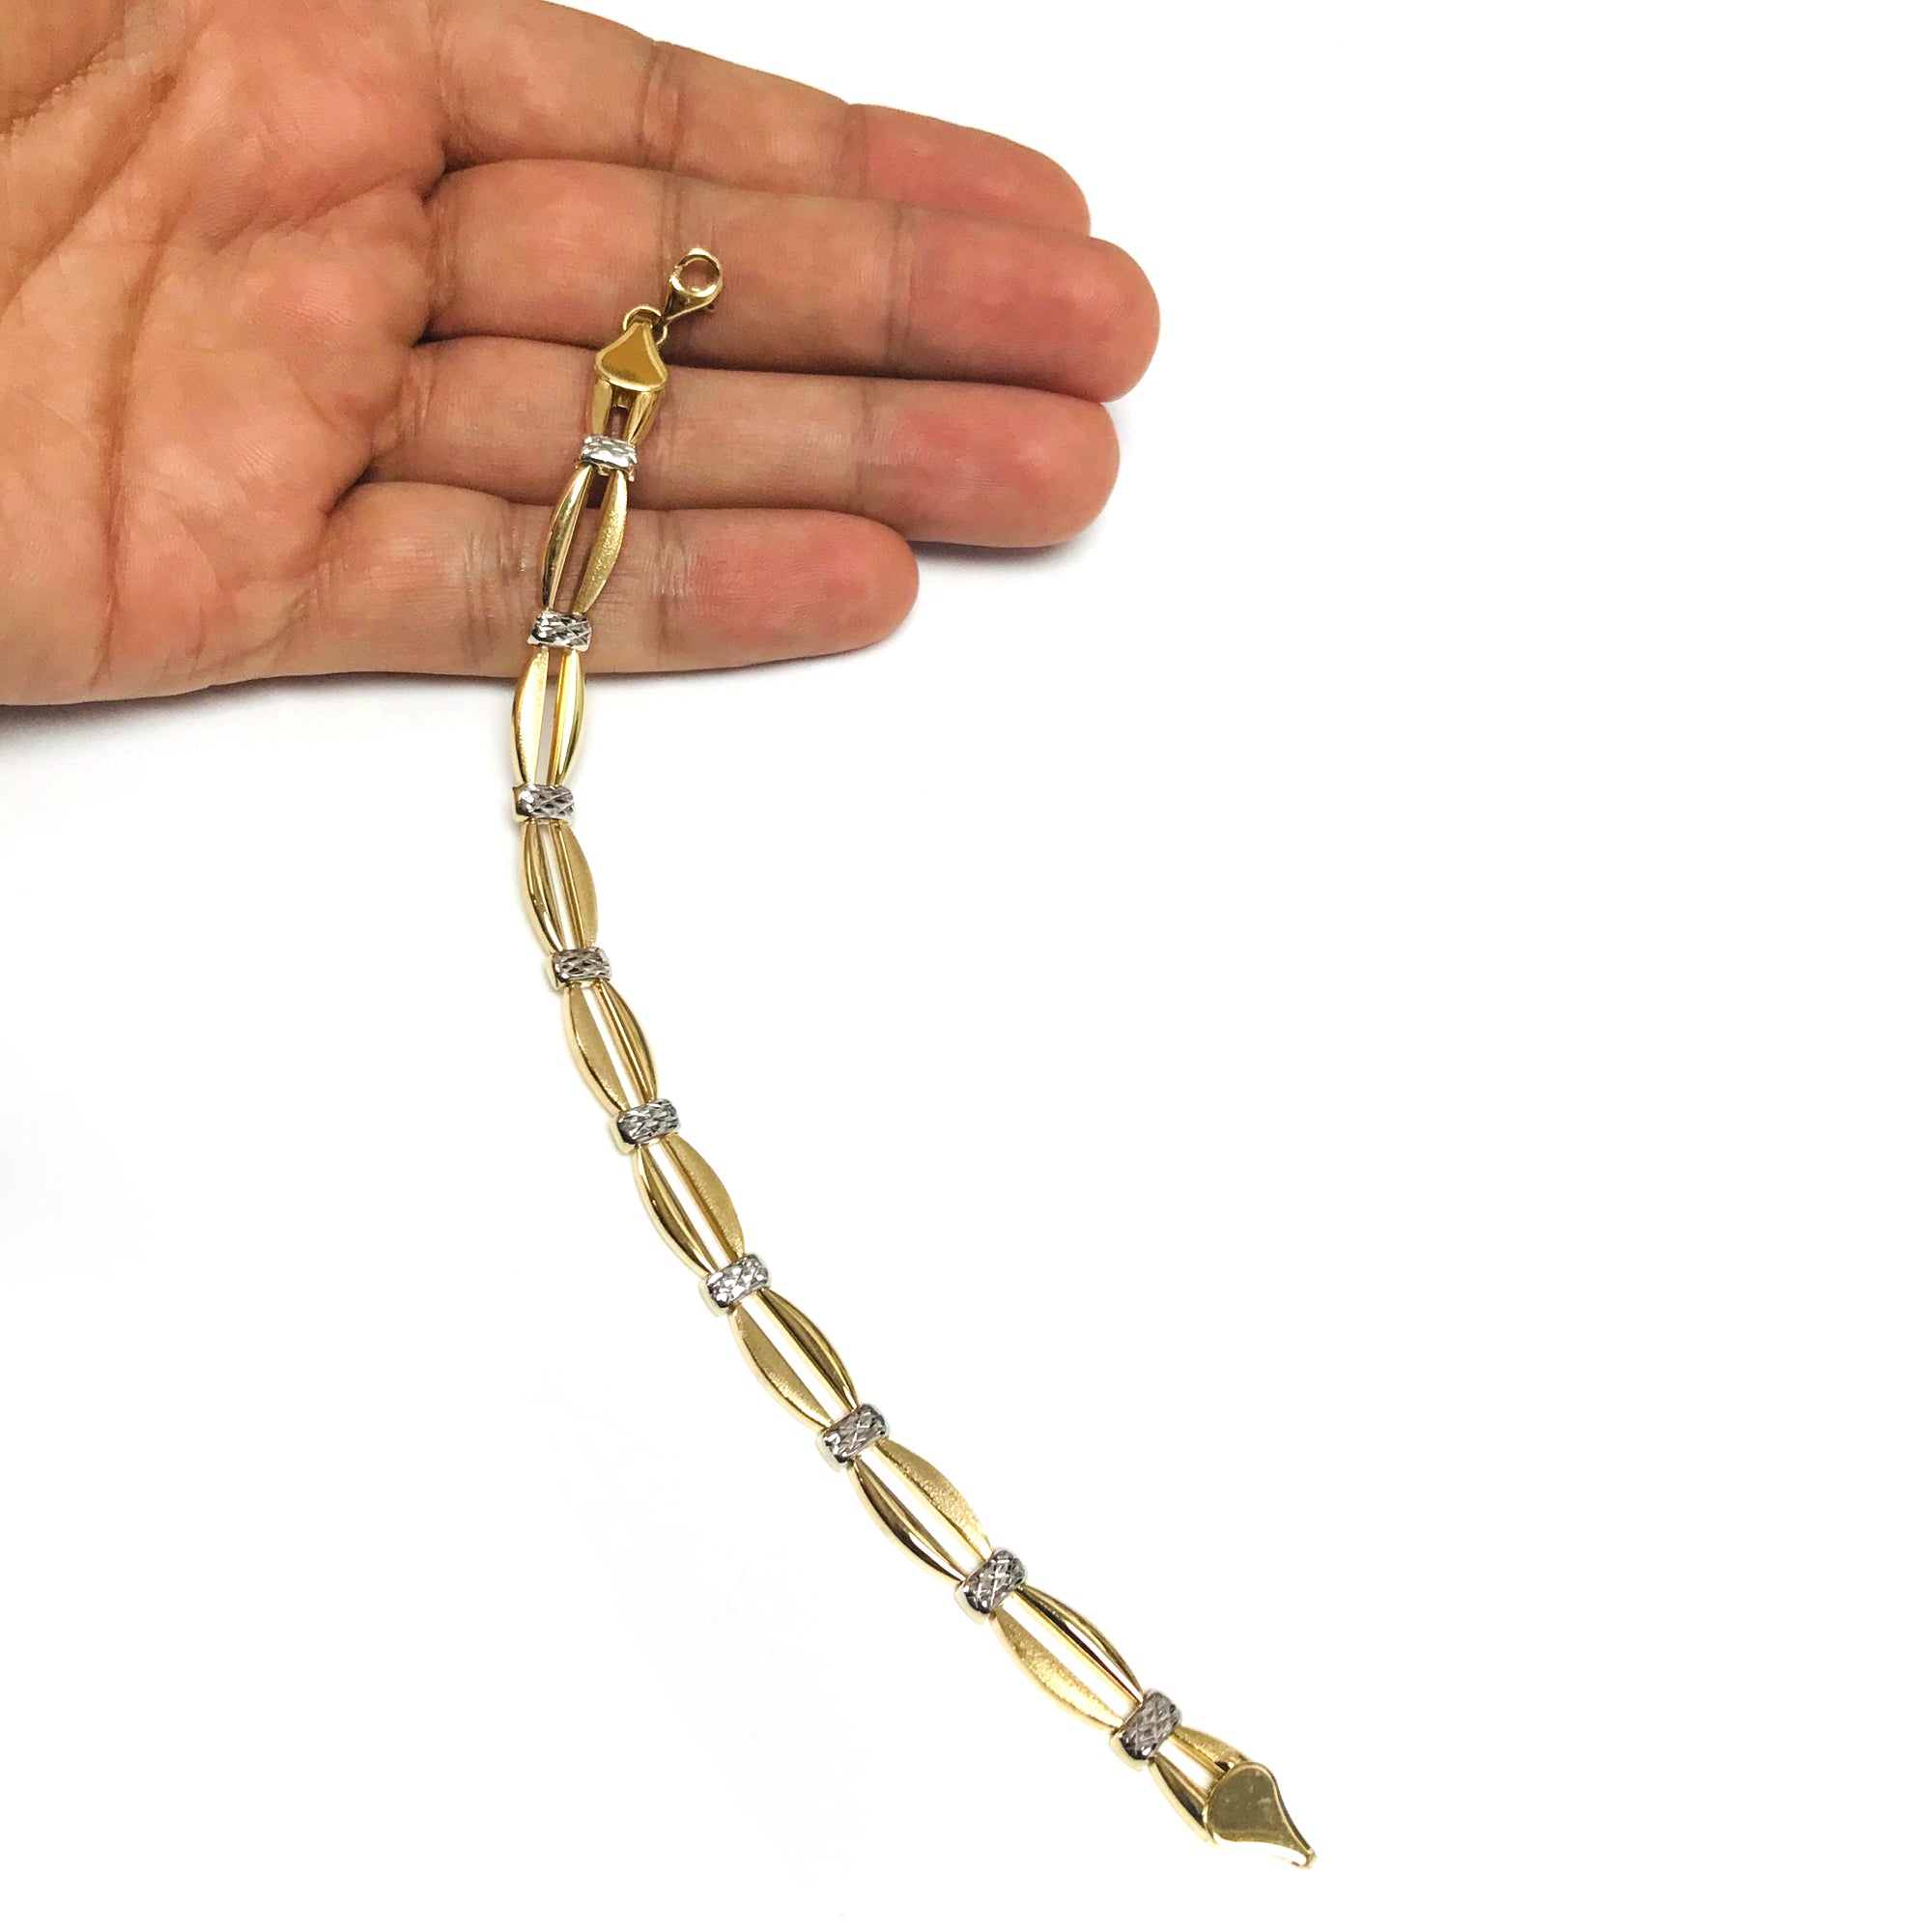 14k Yellow Gold Curved Bar Link Fancy Bracelet, 7.25" fine designer jewelry for men and women